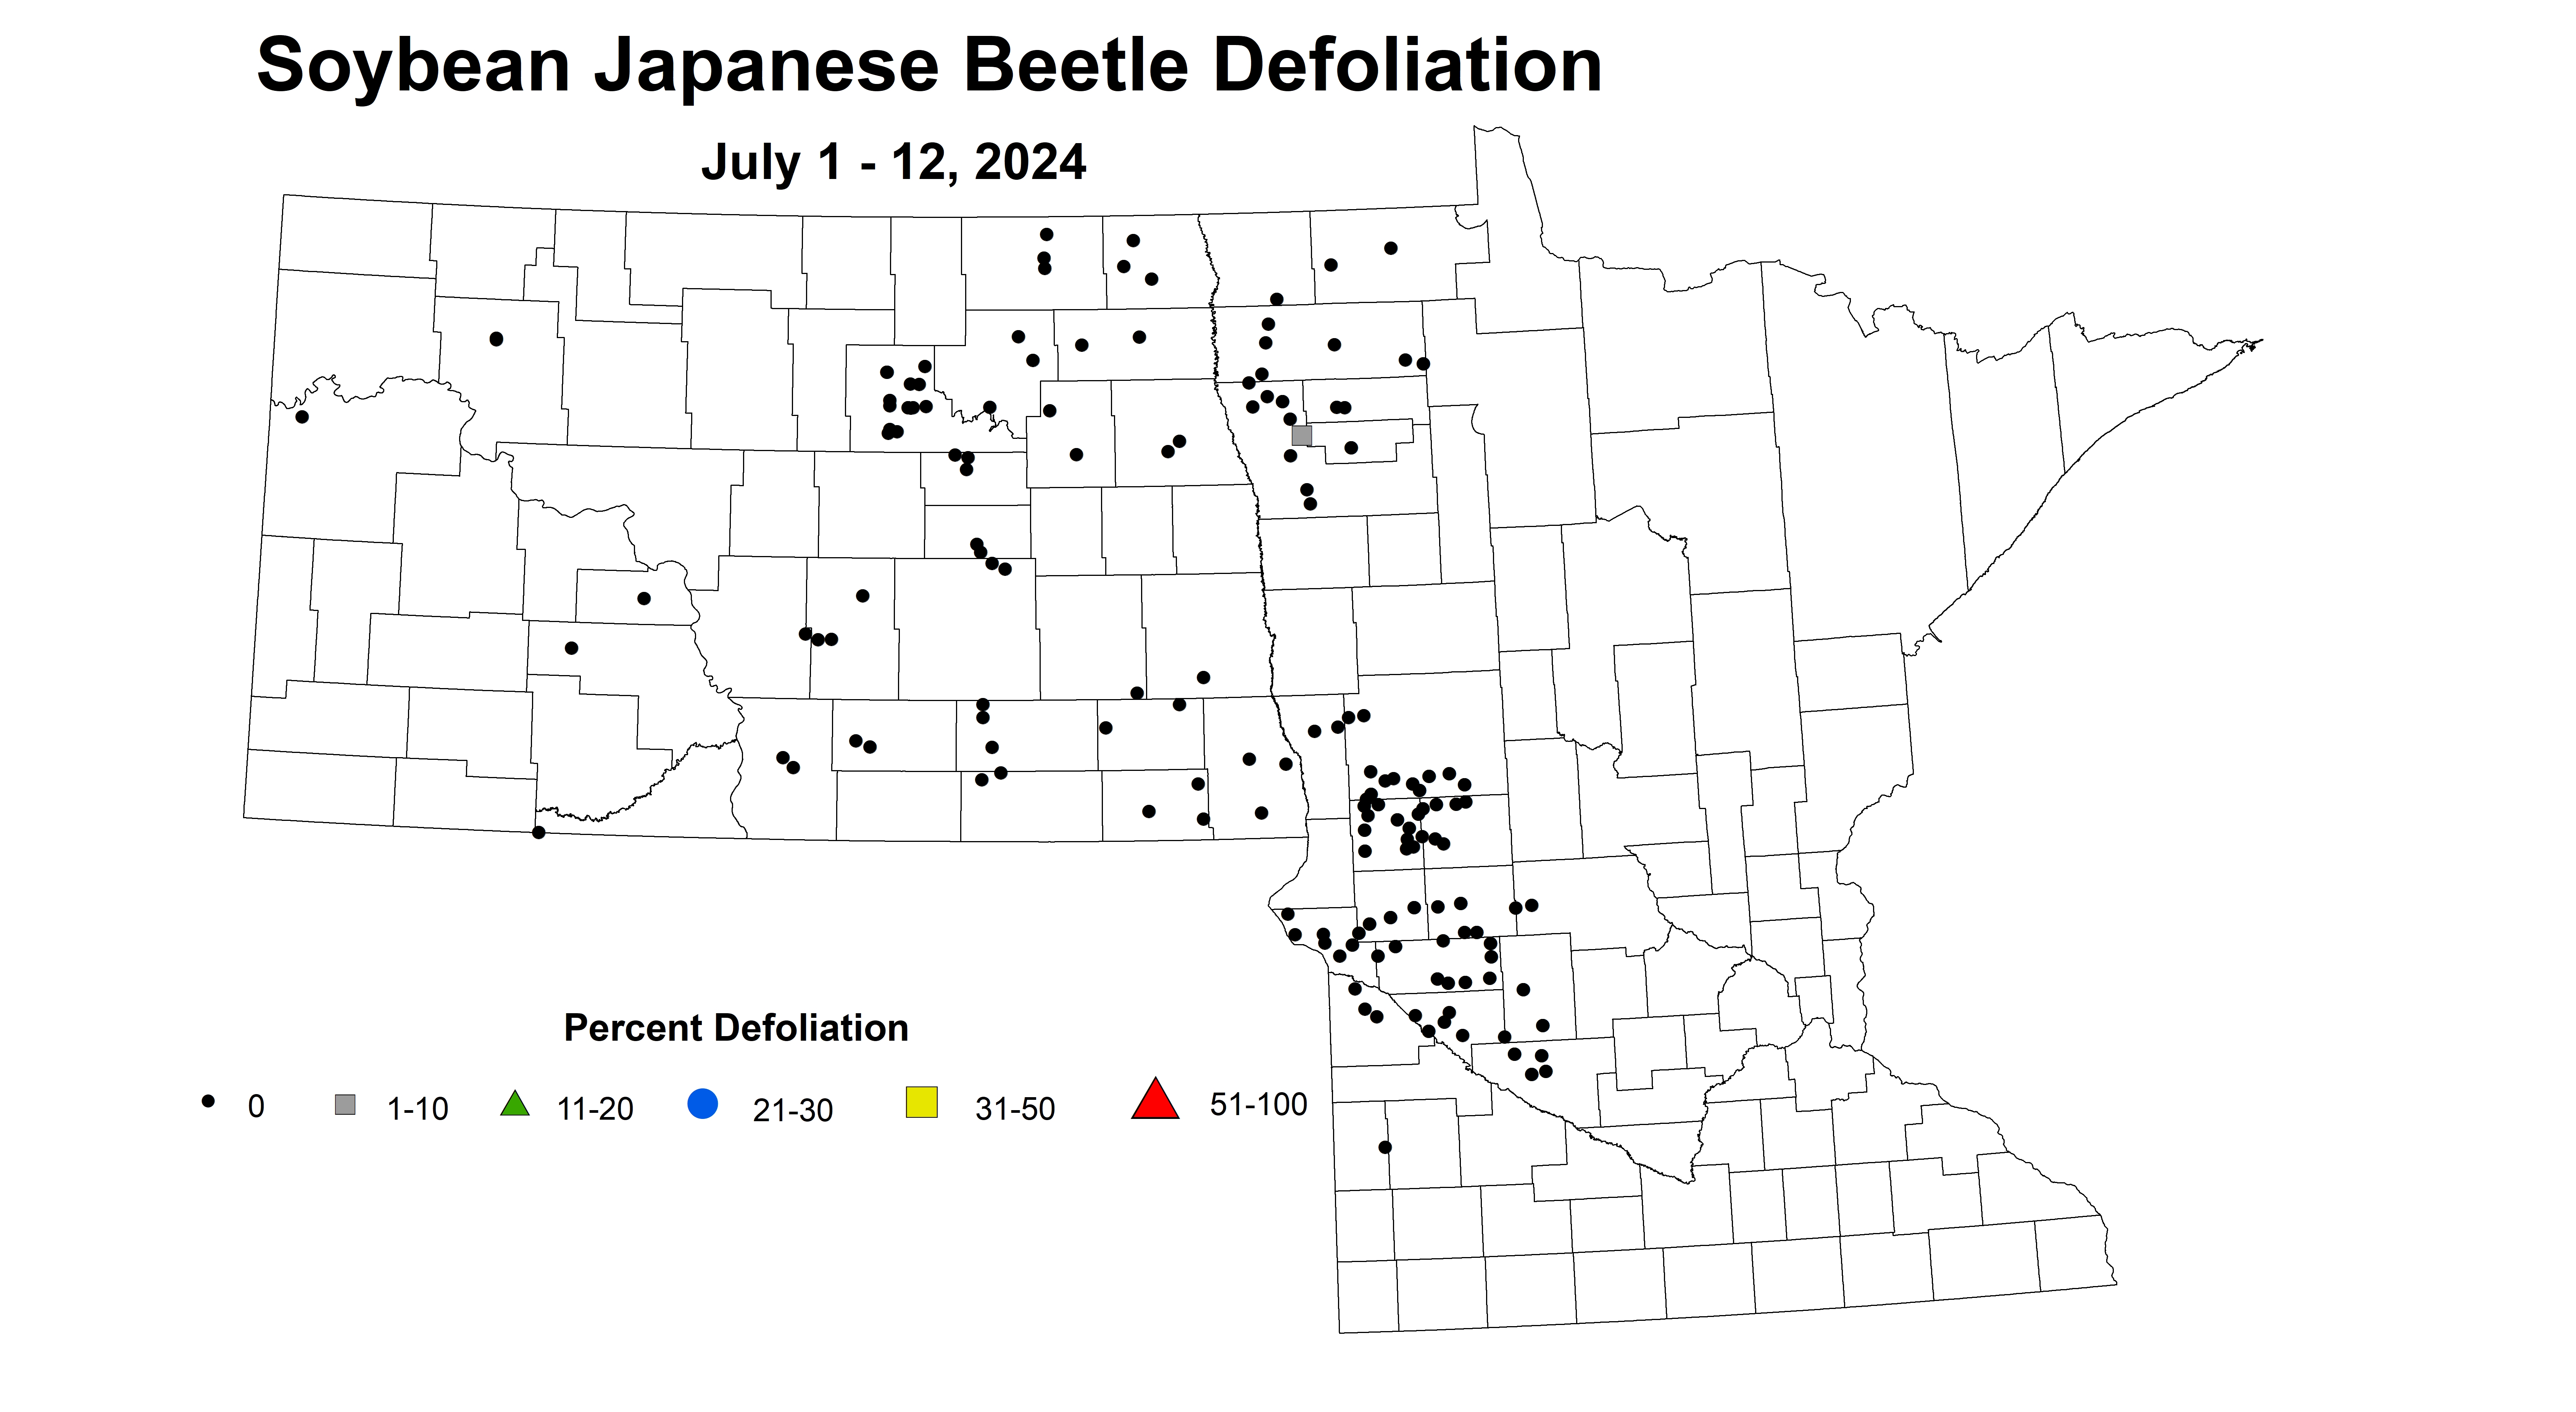 soybean japanese beetle defoliation July 1-12 2024